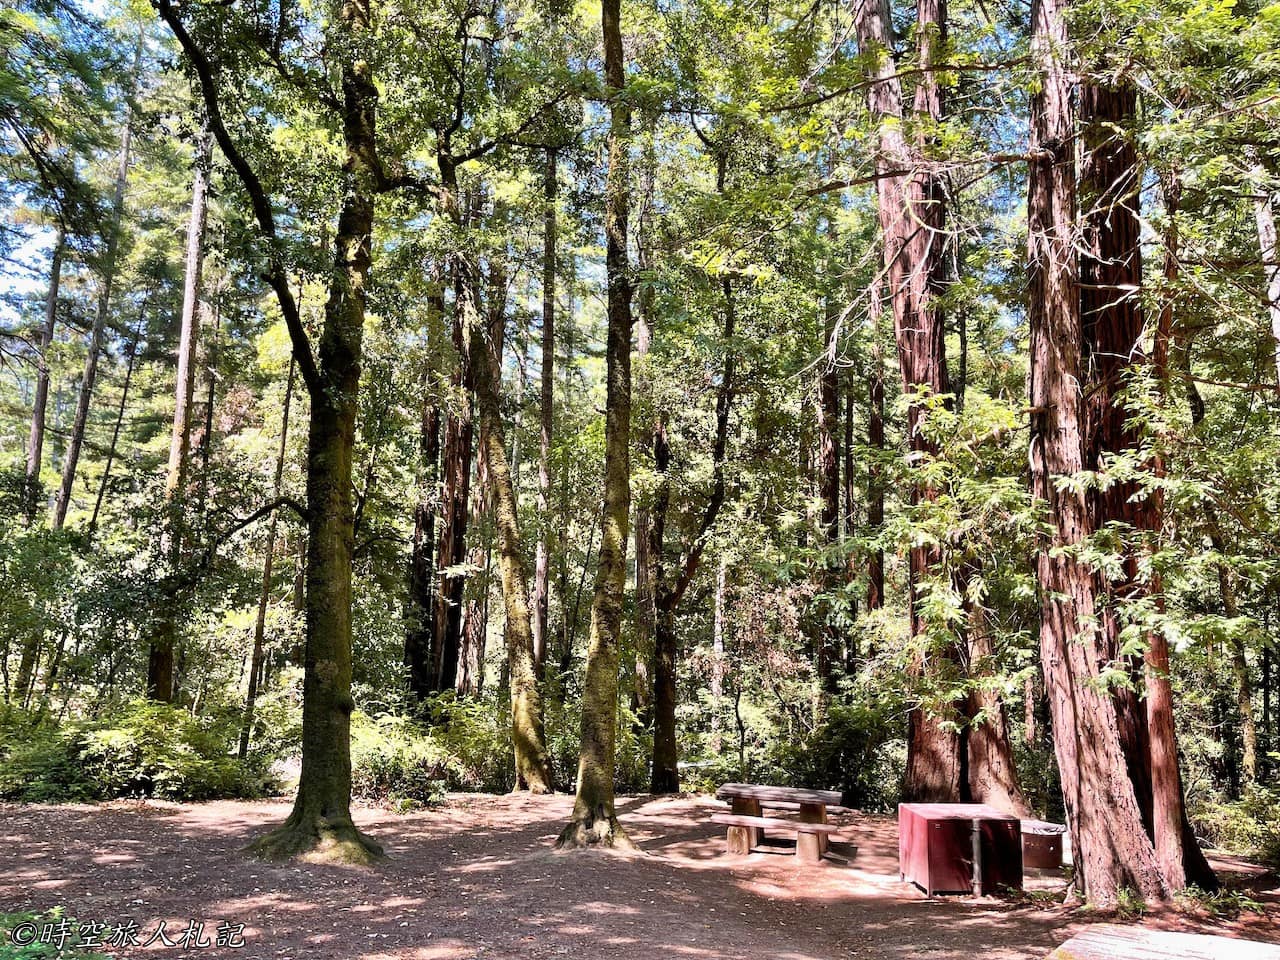 Portola redwood state park,Portola redwood camping,Tiptoe falls 13